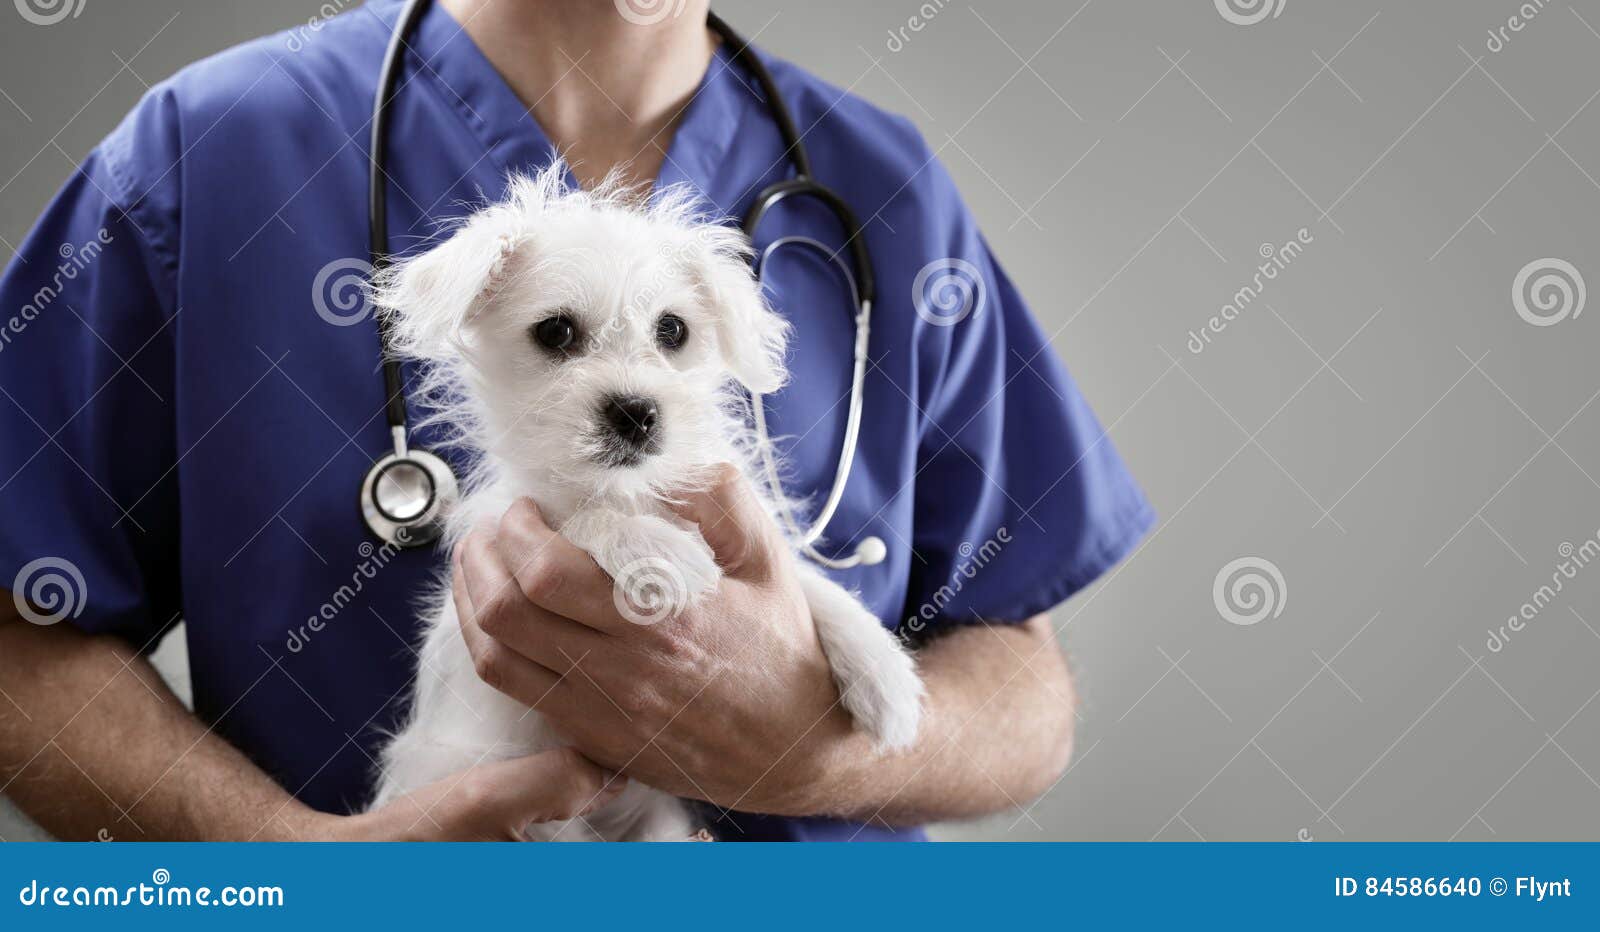 veterinarian doctor examining a maltese puppy